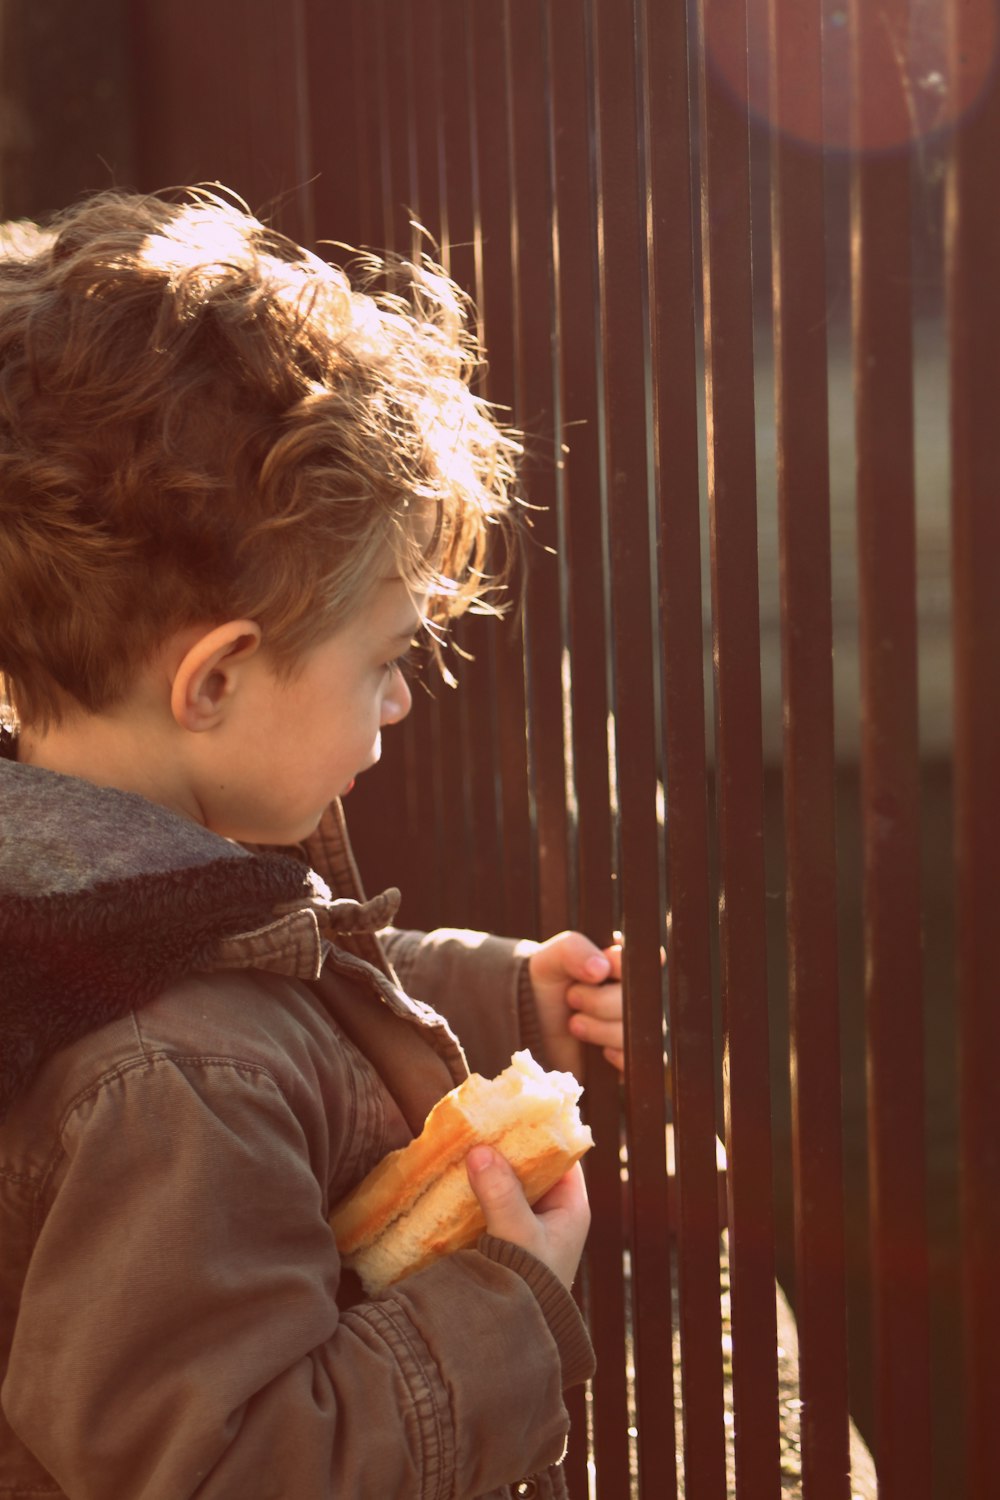 shallow focus photo of boy holding sandwich